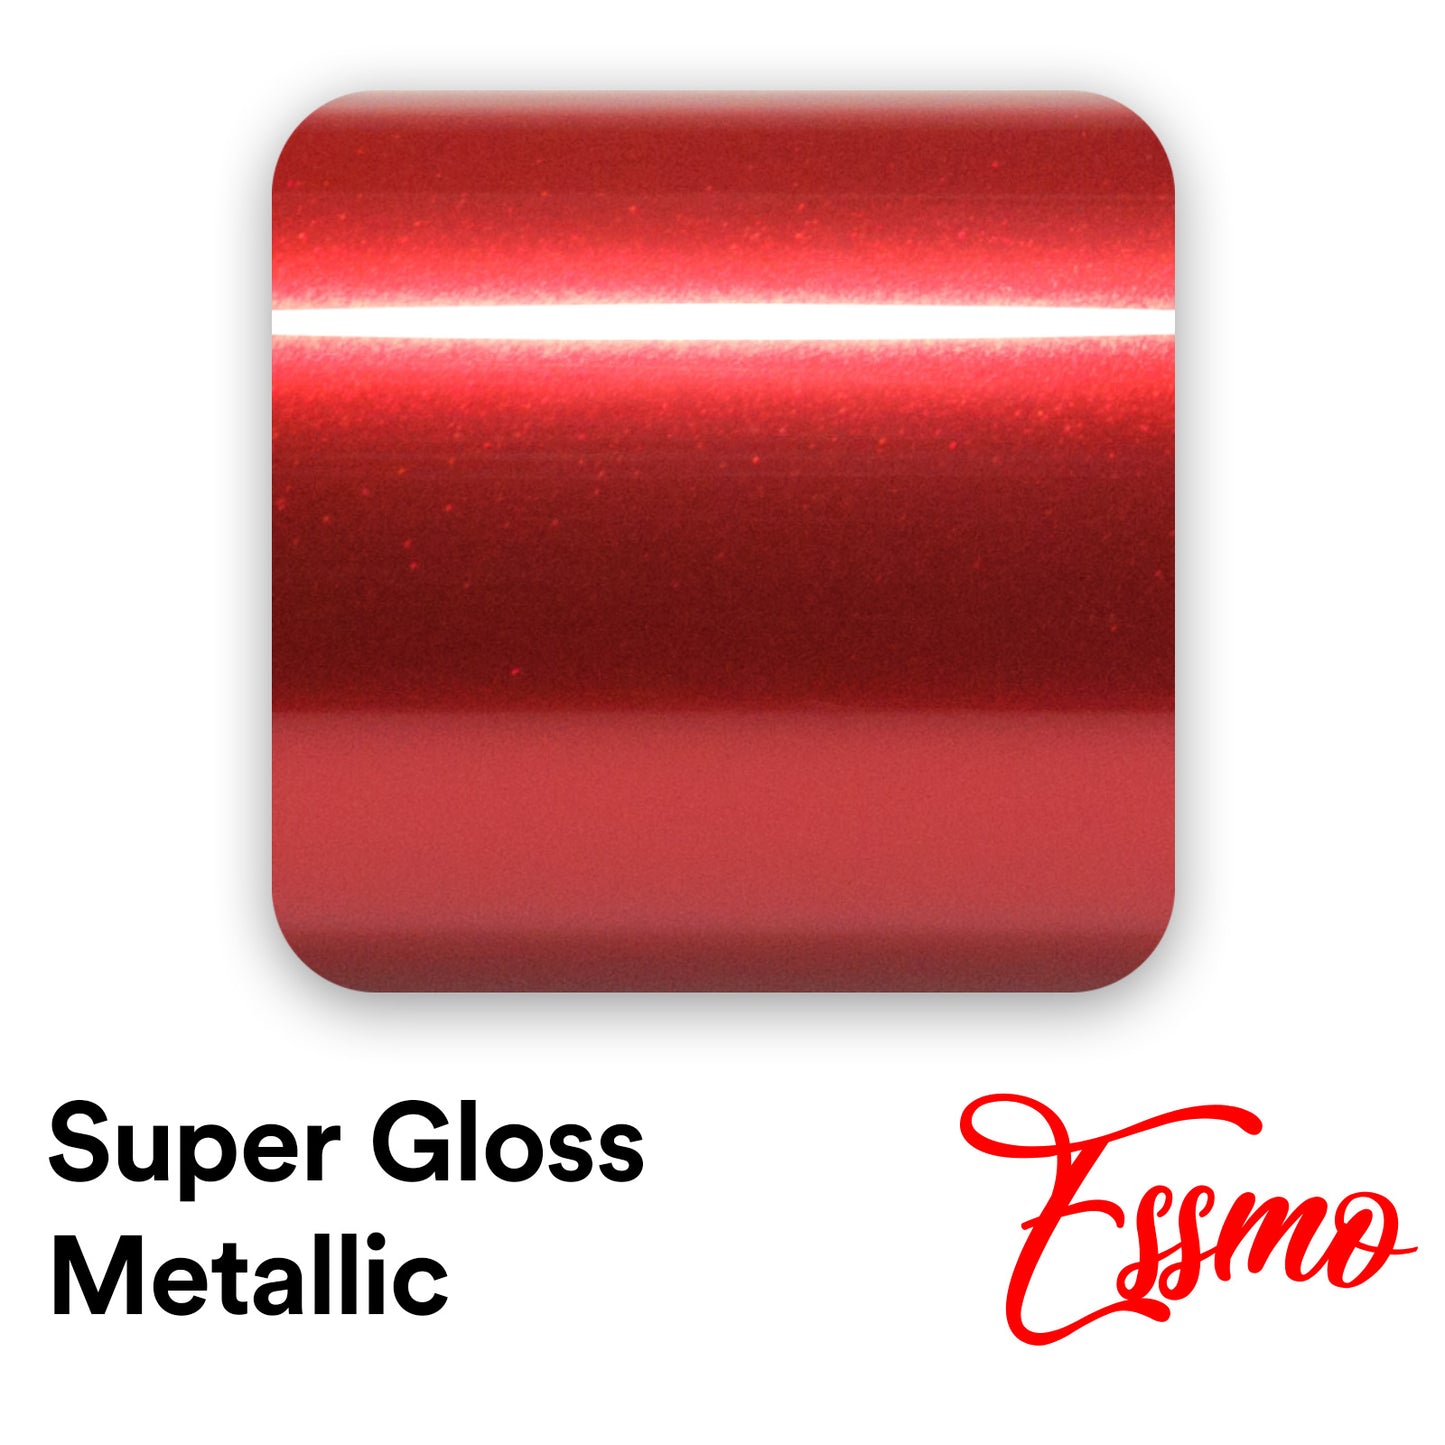 Super Gloss Metallic Soul Red Vinyl Wrap